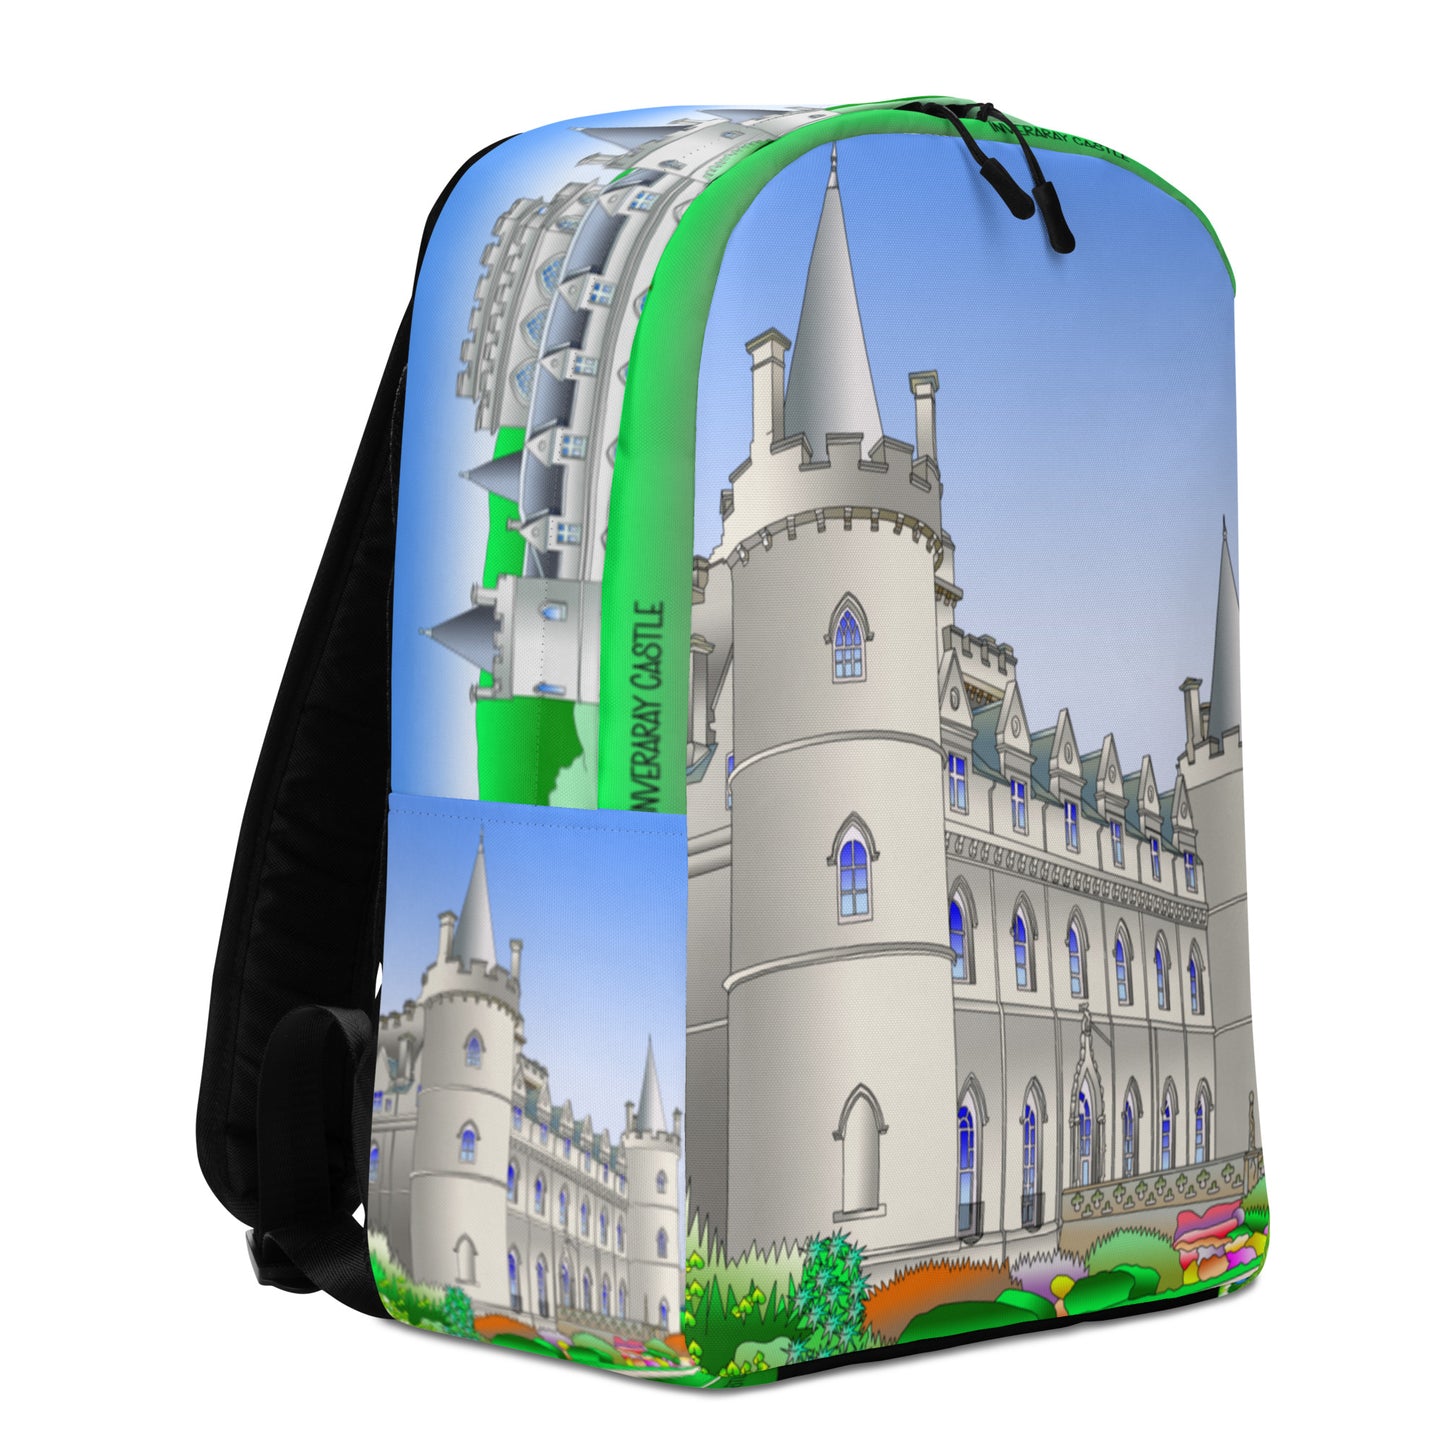 Inveraray Castle Backpack